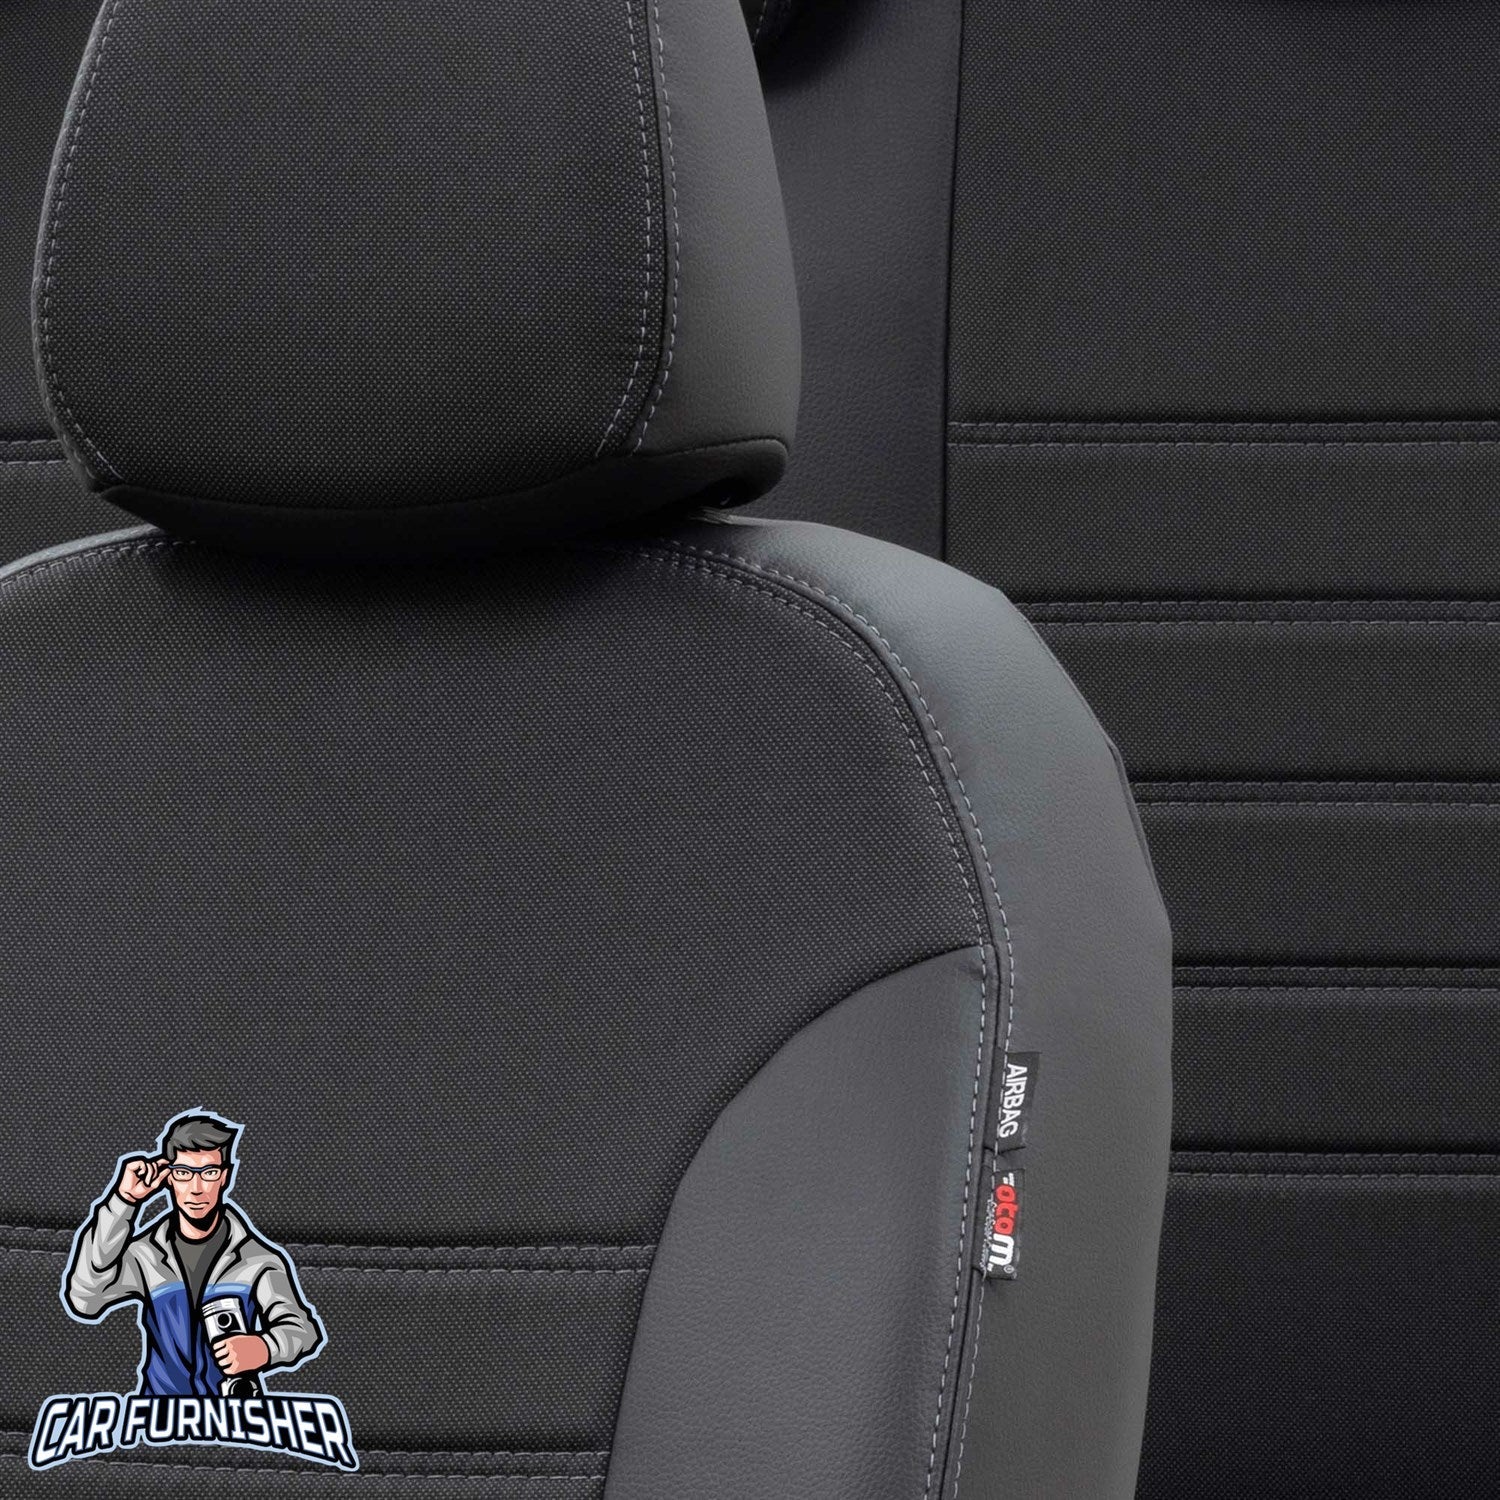 Volvo V40 Seat Cover Paris Leather & Jacquard Design Black Leather & Jacquard Fabric